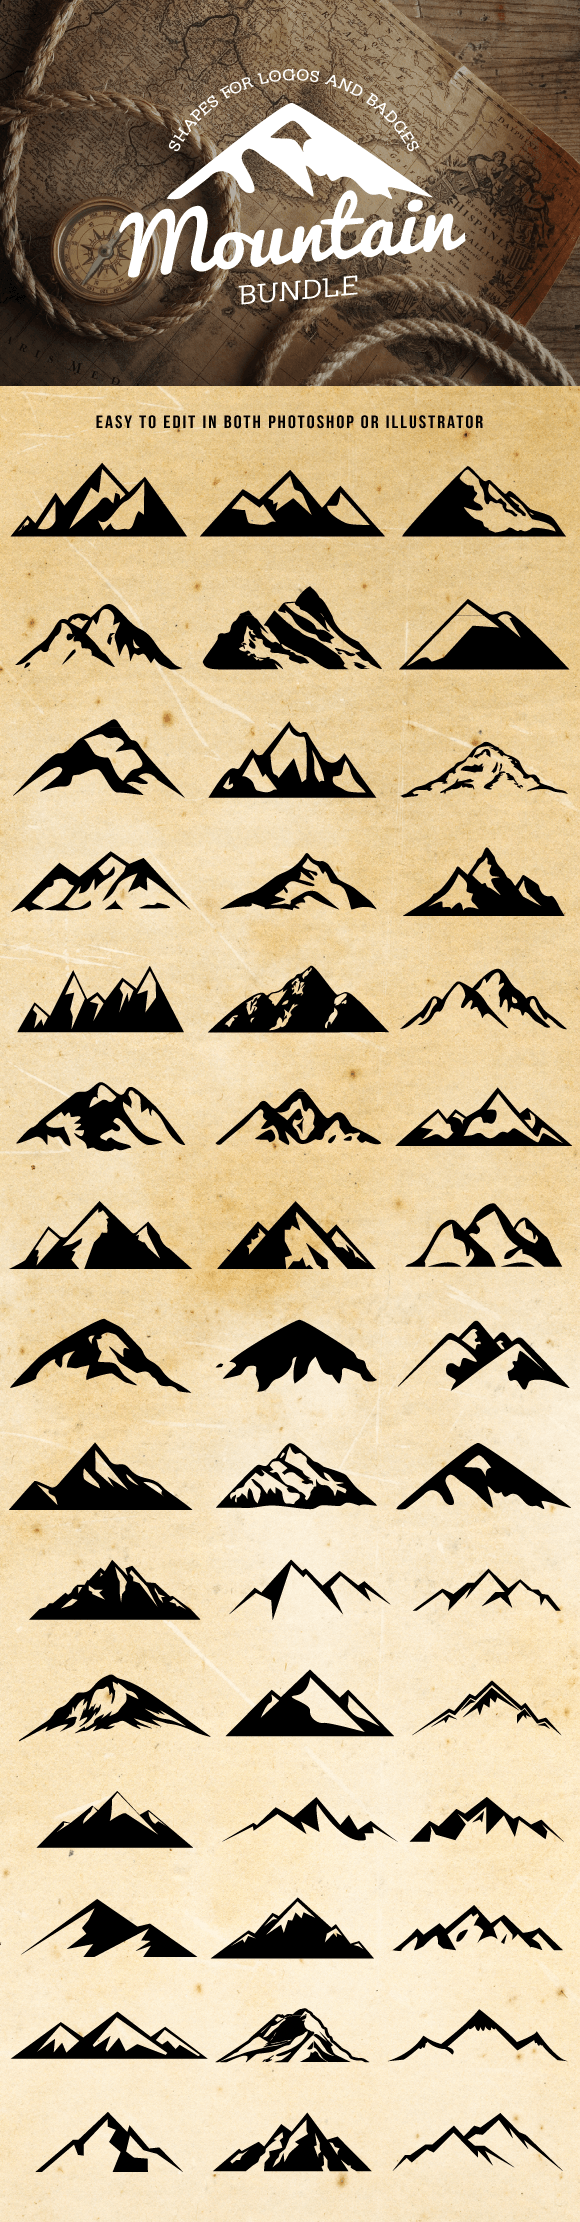 Simple Mountain Range Logo - Creative #Mountain Shapes For #Logos Bundle by lovepower on Creative